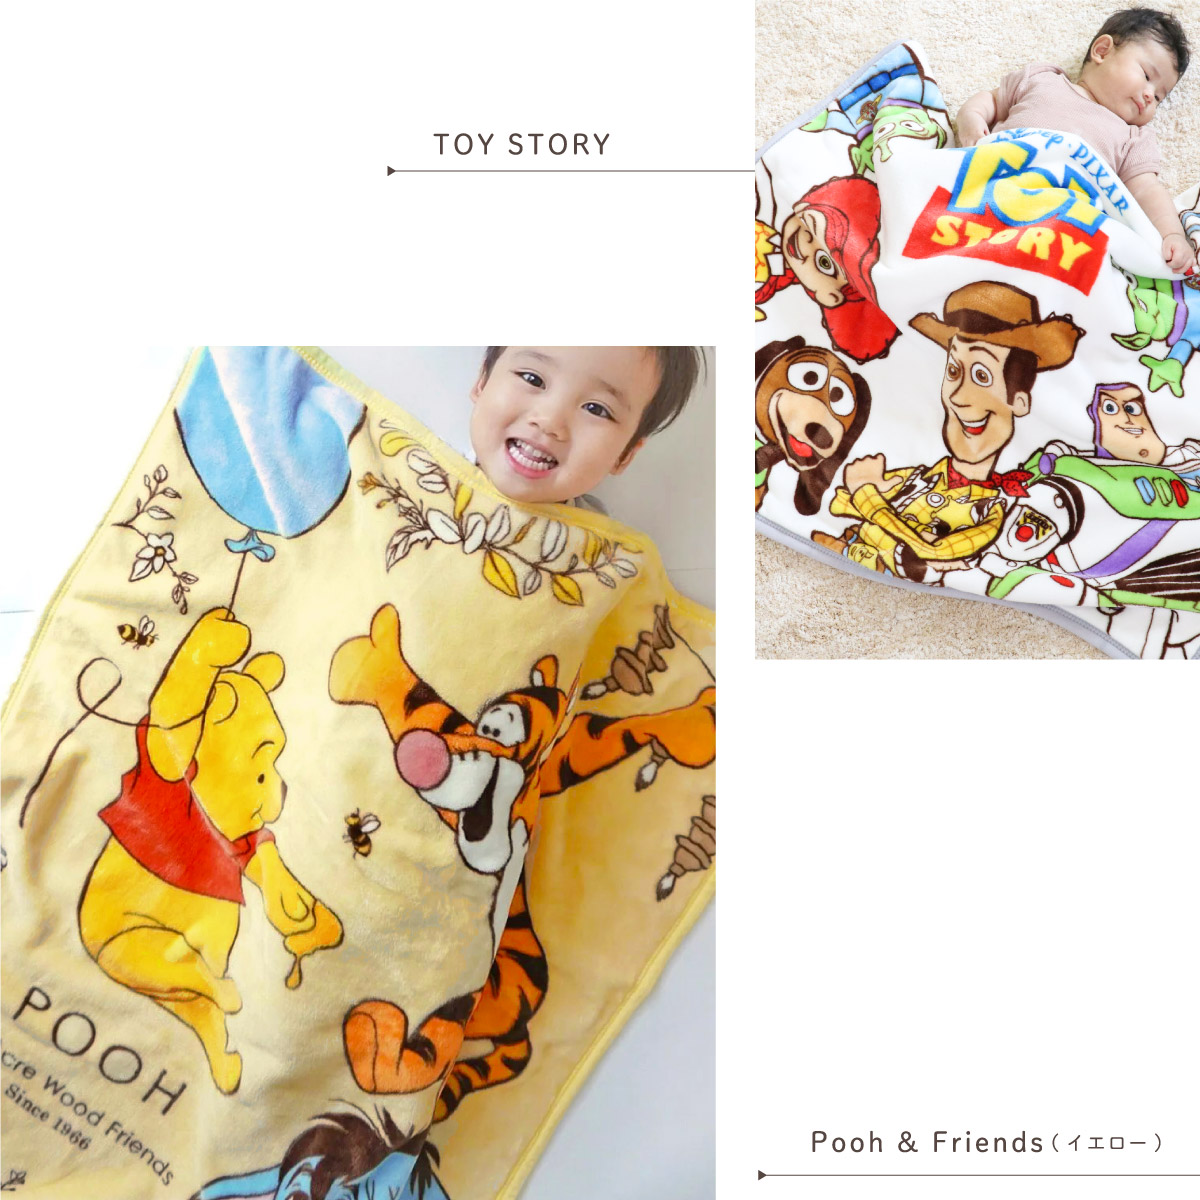  Disney baby blanket 85×115cm new ma year retro Mickey Pooh hole . snow. woman . Princess toy * -stroke - Lee Bambi blanket un doudou